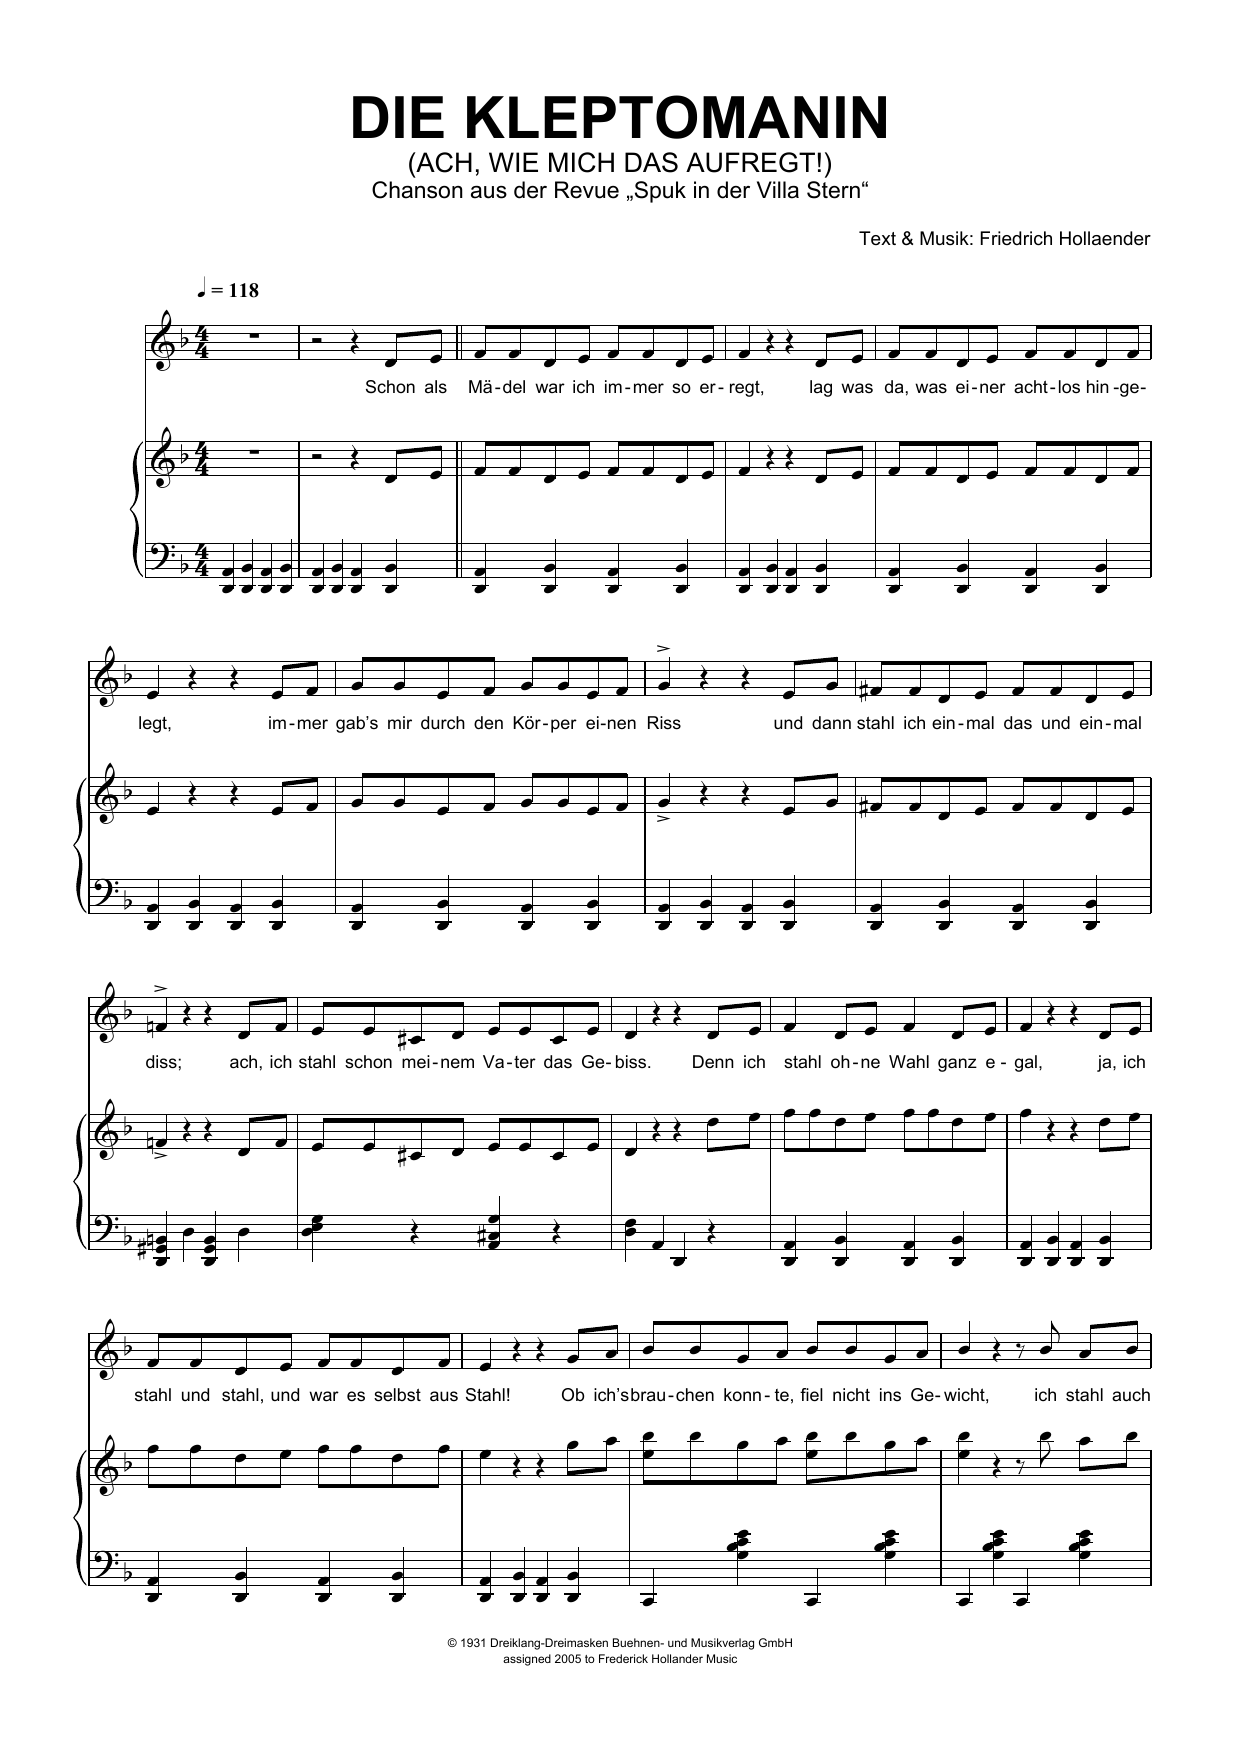 Download Friedrich Hollaender Die Kleptomanin (Ach, Wie Mich Das Aufregt!) Sheet Music and learn how to play Piano & Vocal PDF digital score in minutes